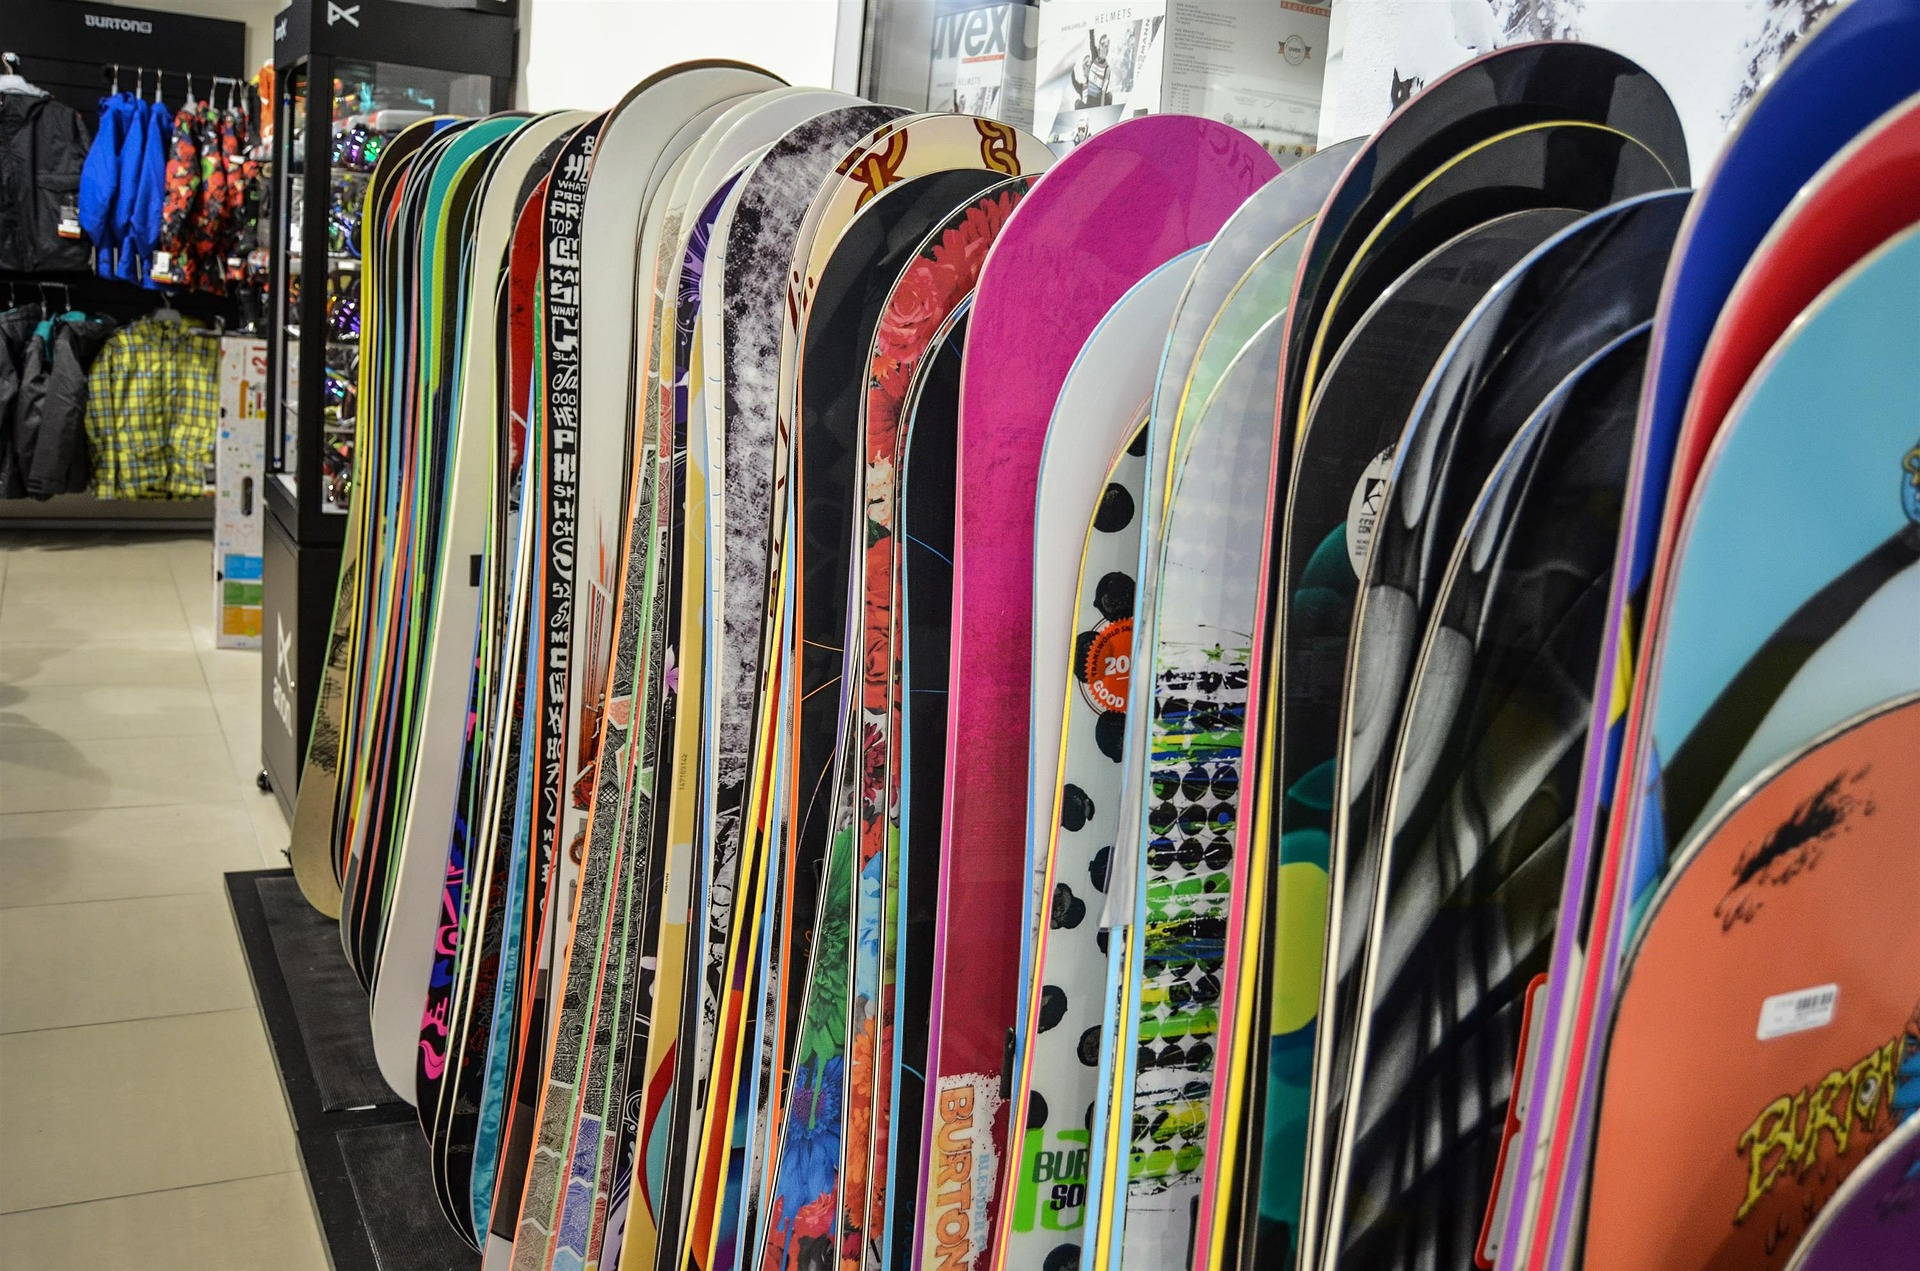 Snowboards on display